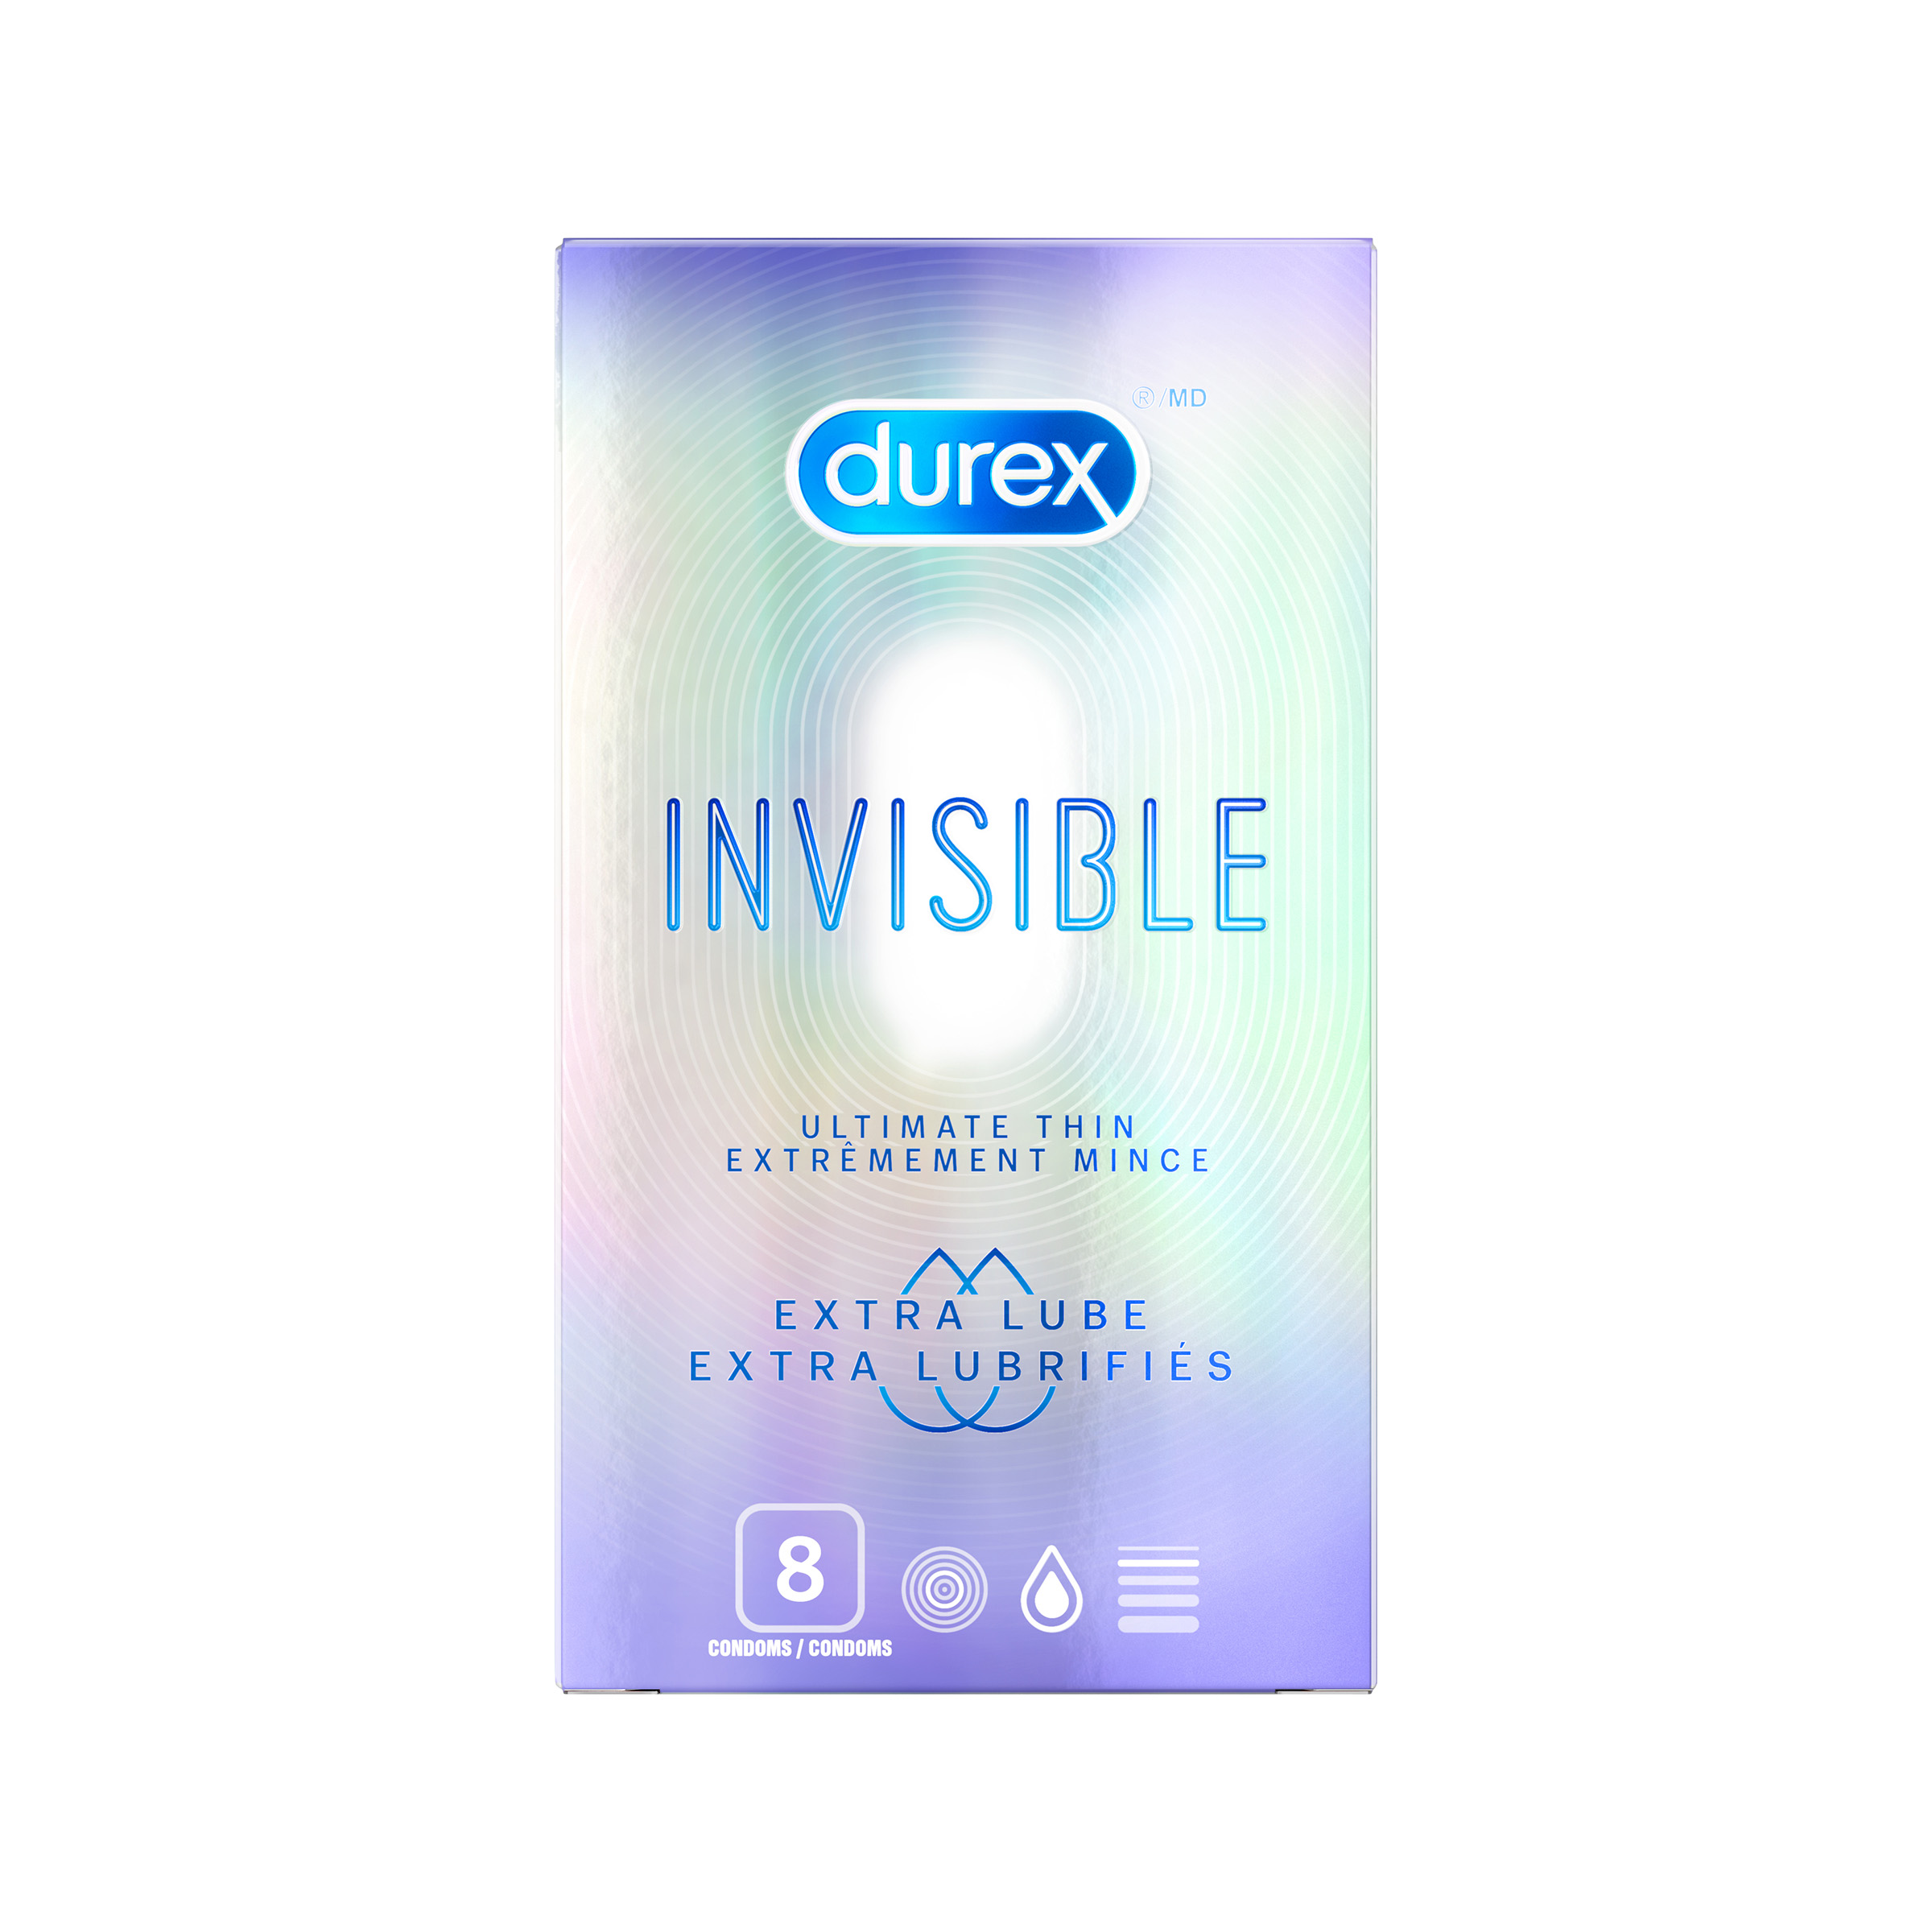 DUREX Invisible Ultimate Thin Extra Lube Condoms Canada